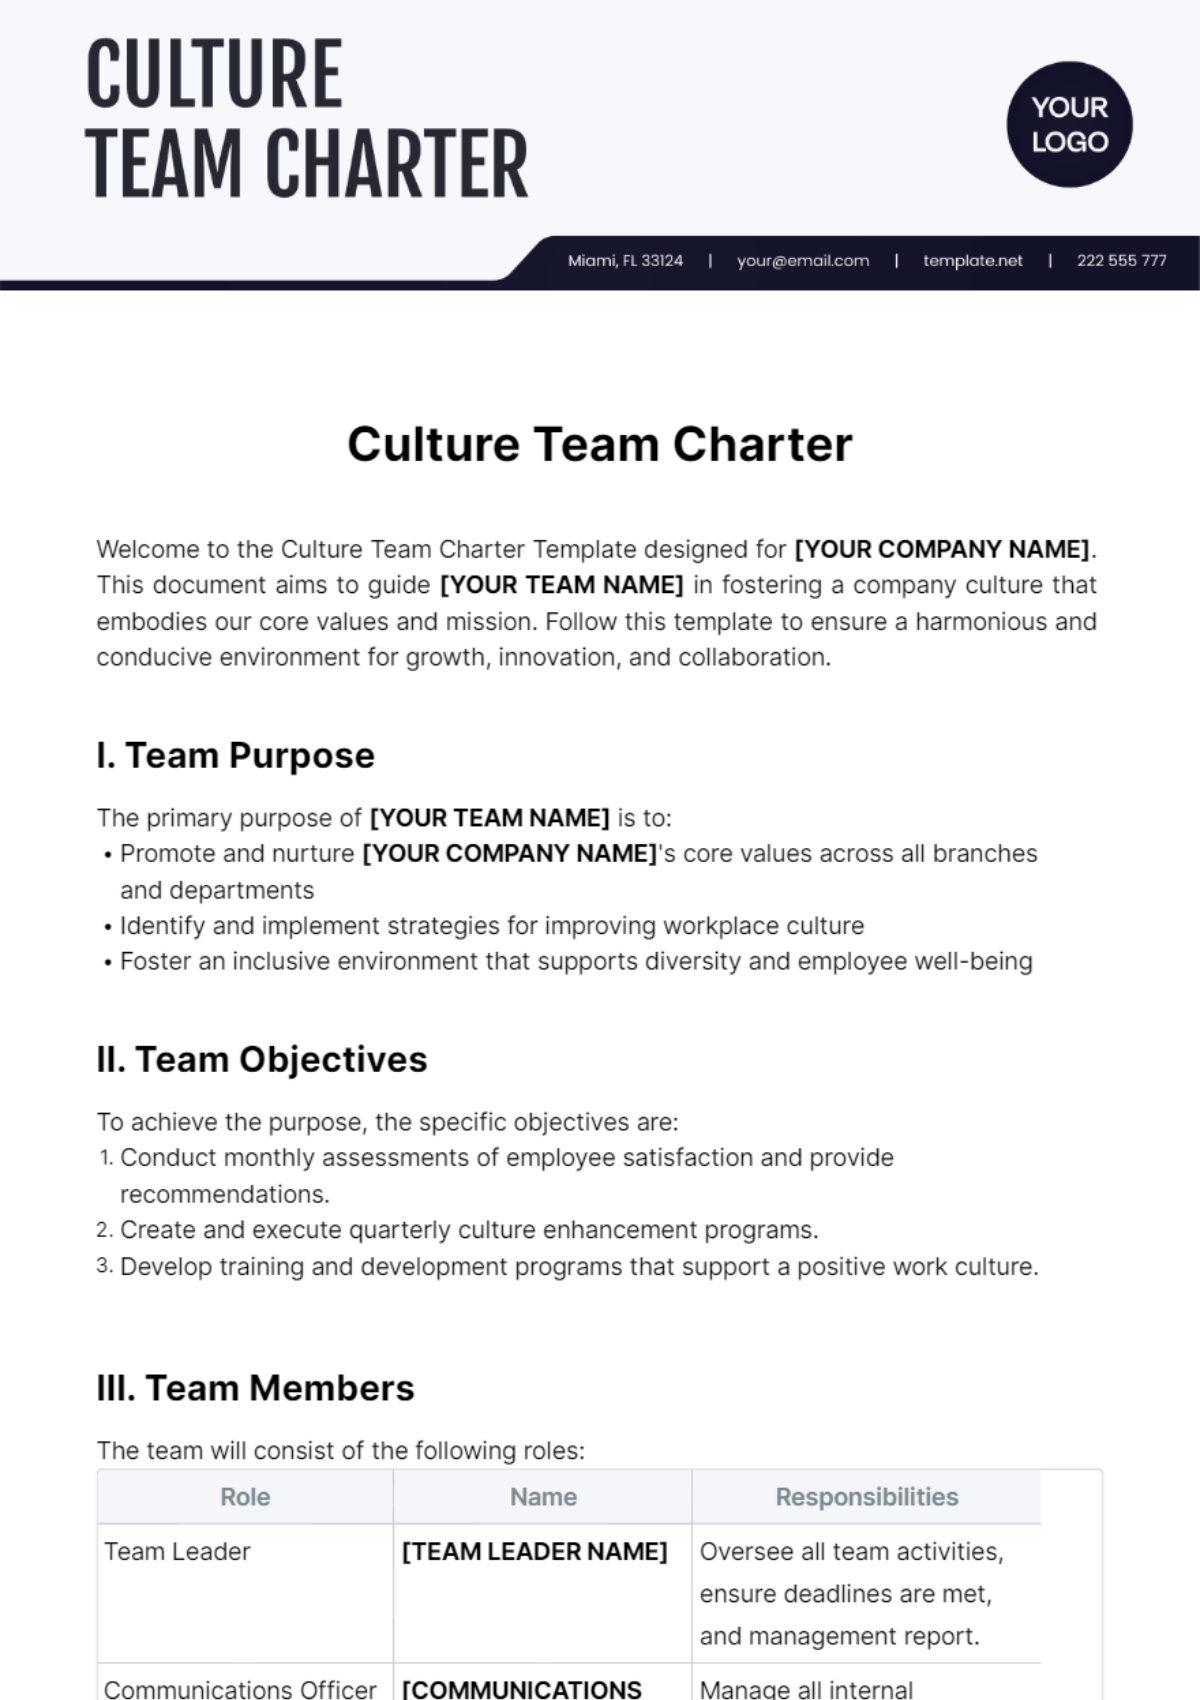 Culture Team Charter Template